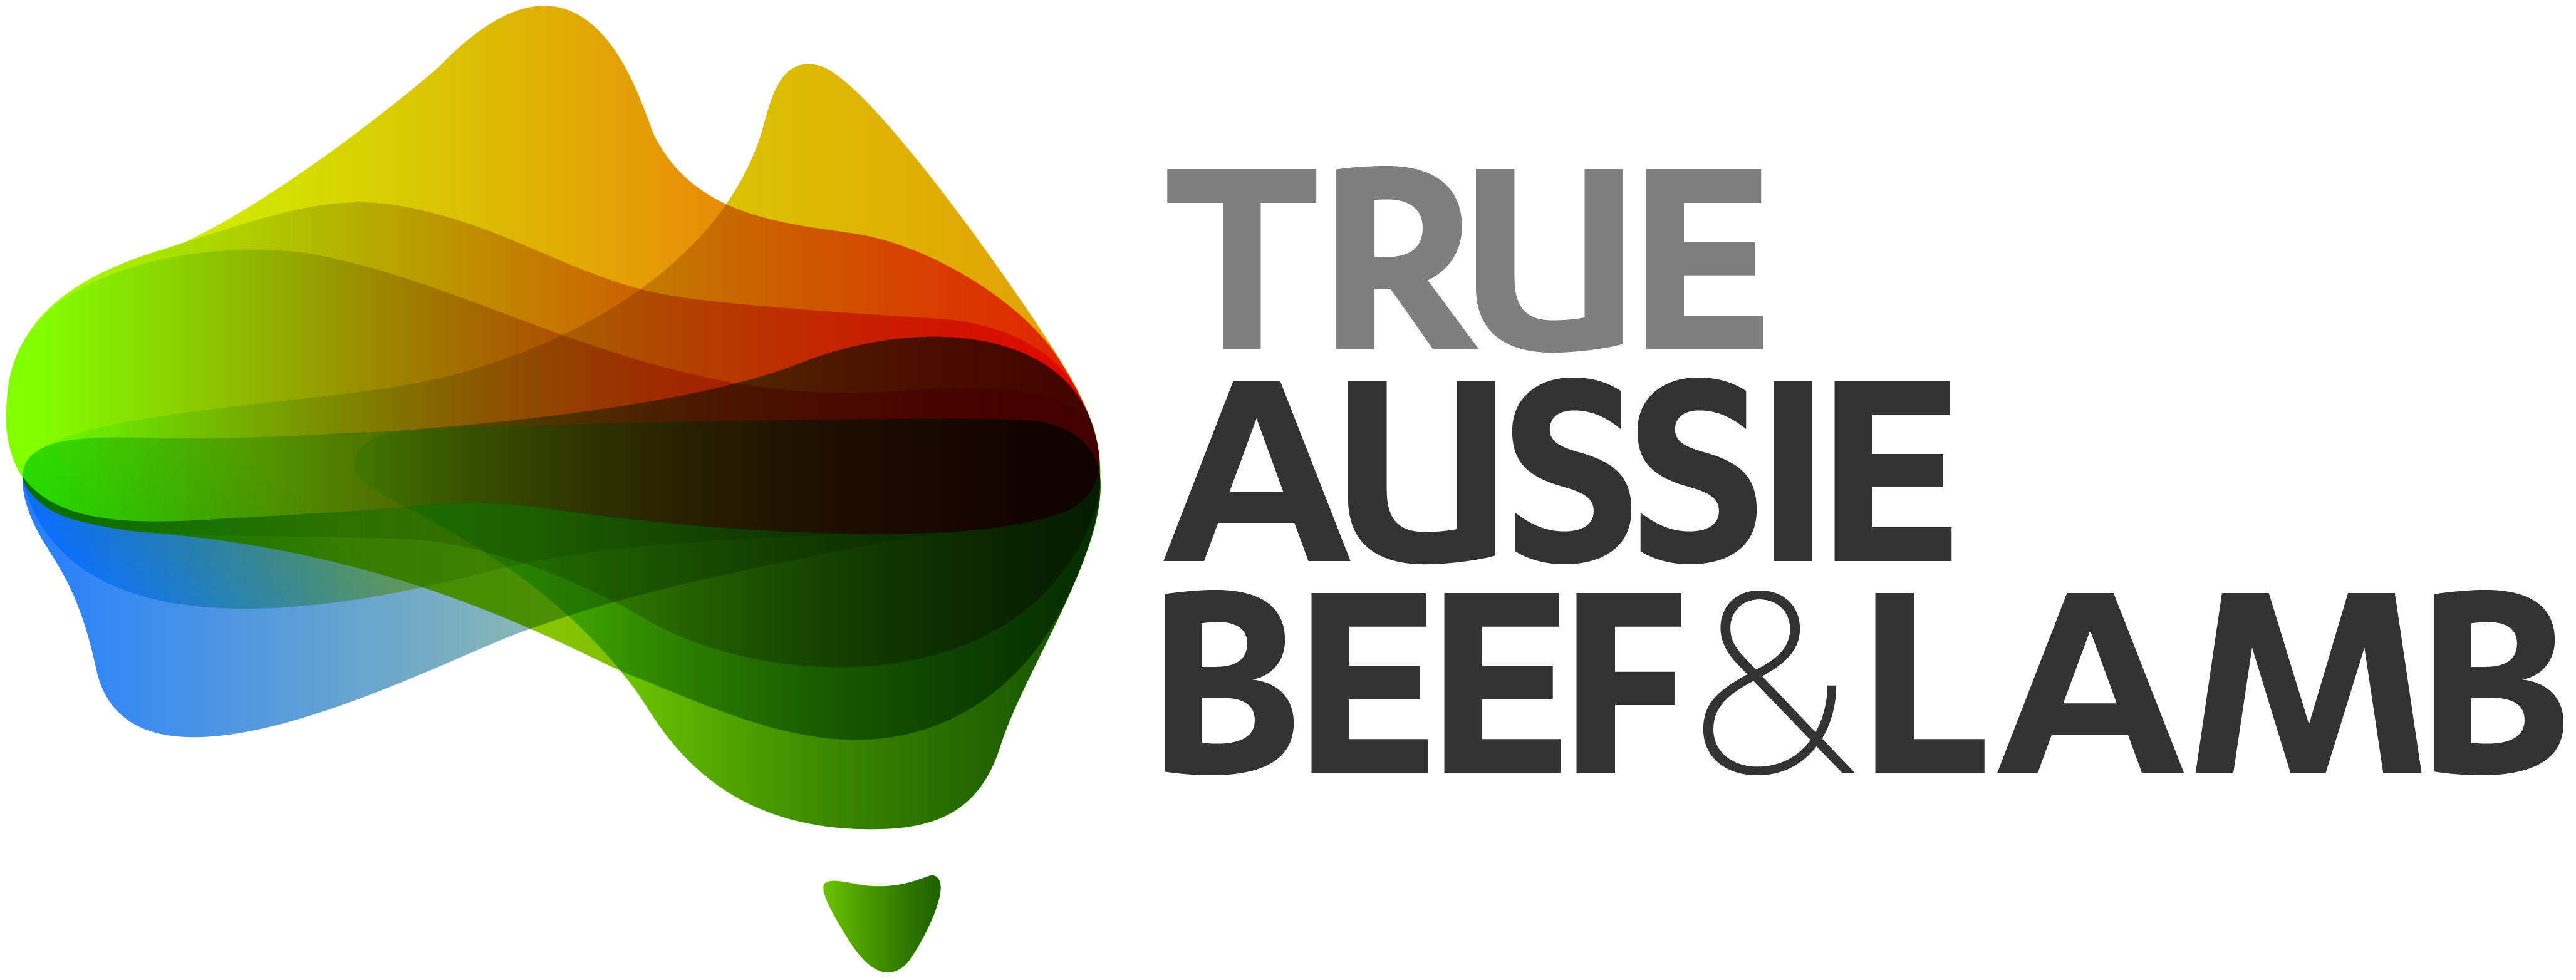 Australian Beef Logo - Meat & Livestock Australia | International Corporate Chefs Association